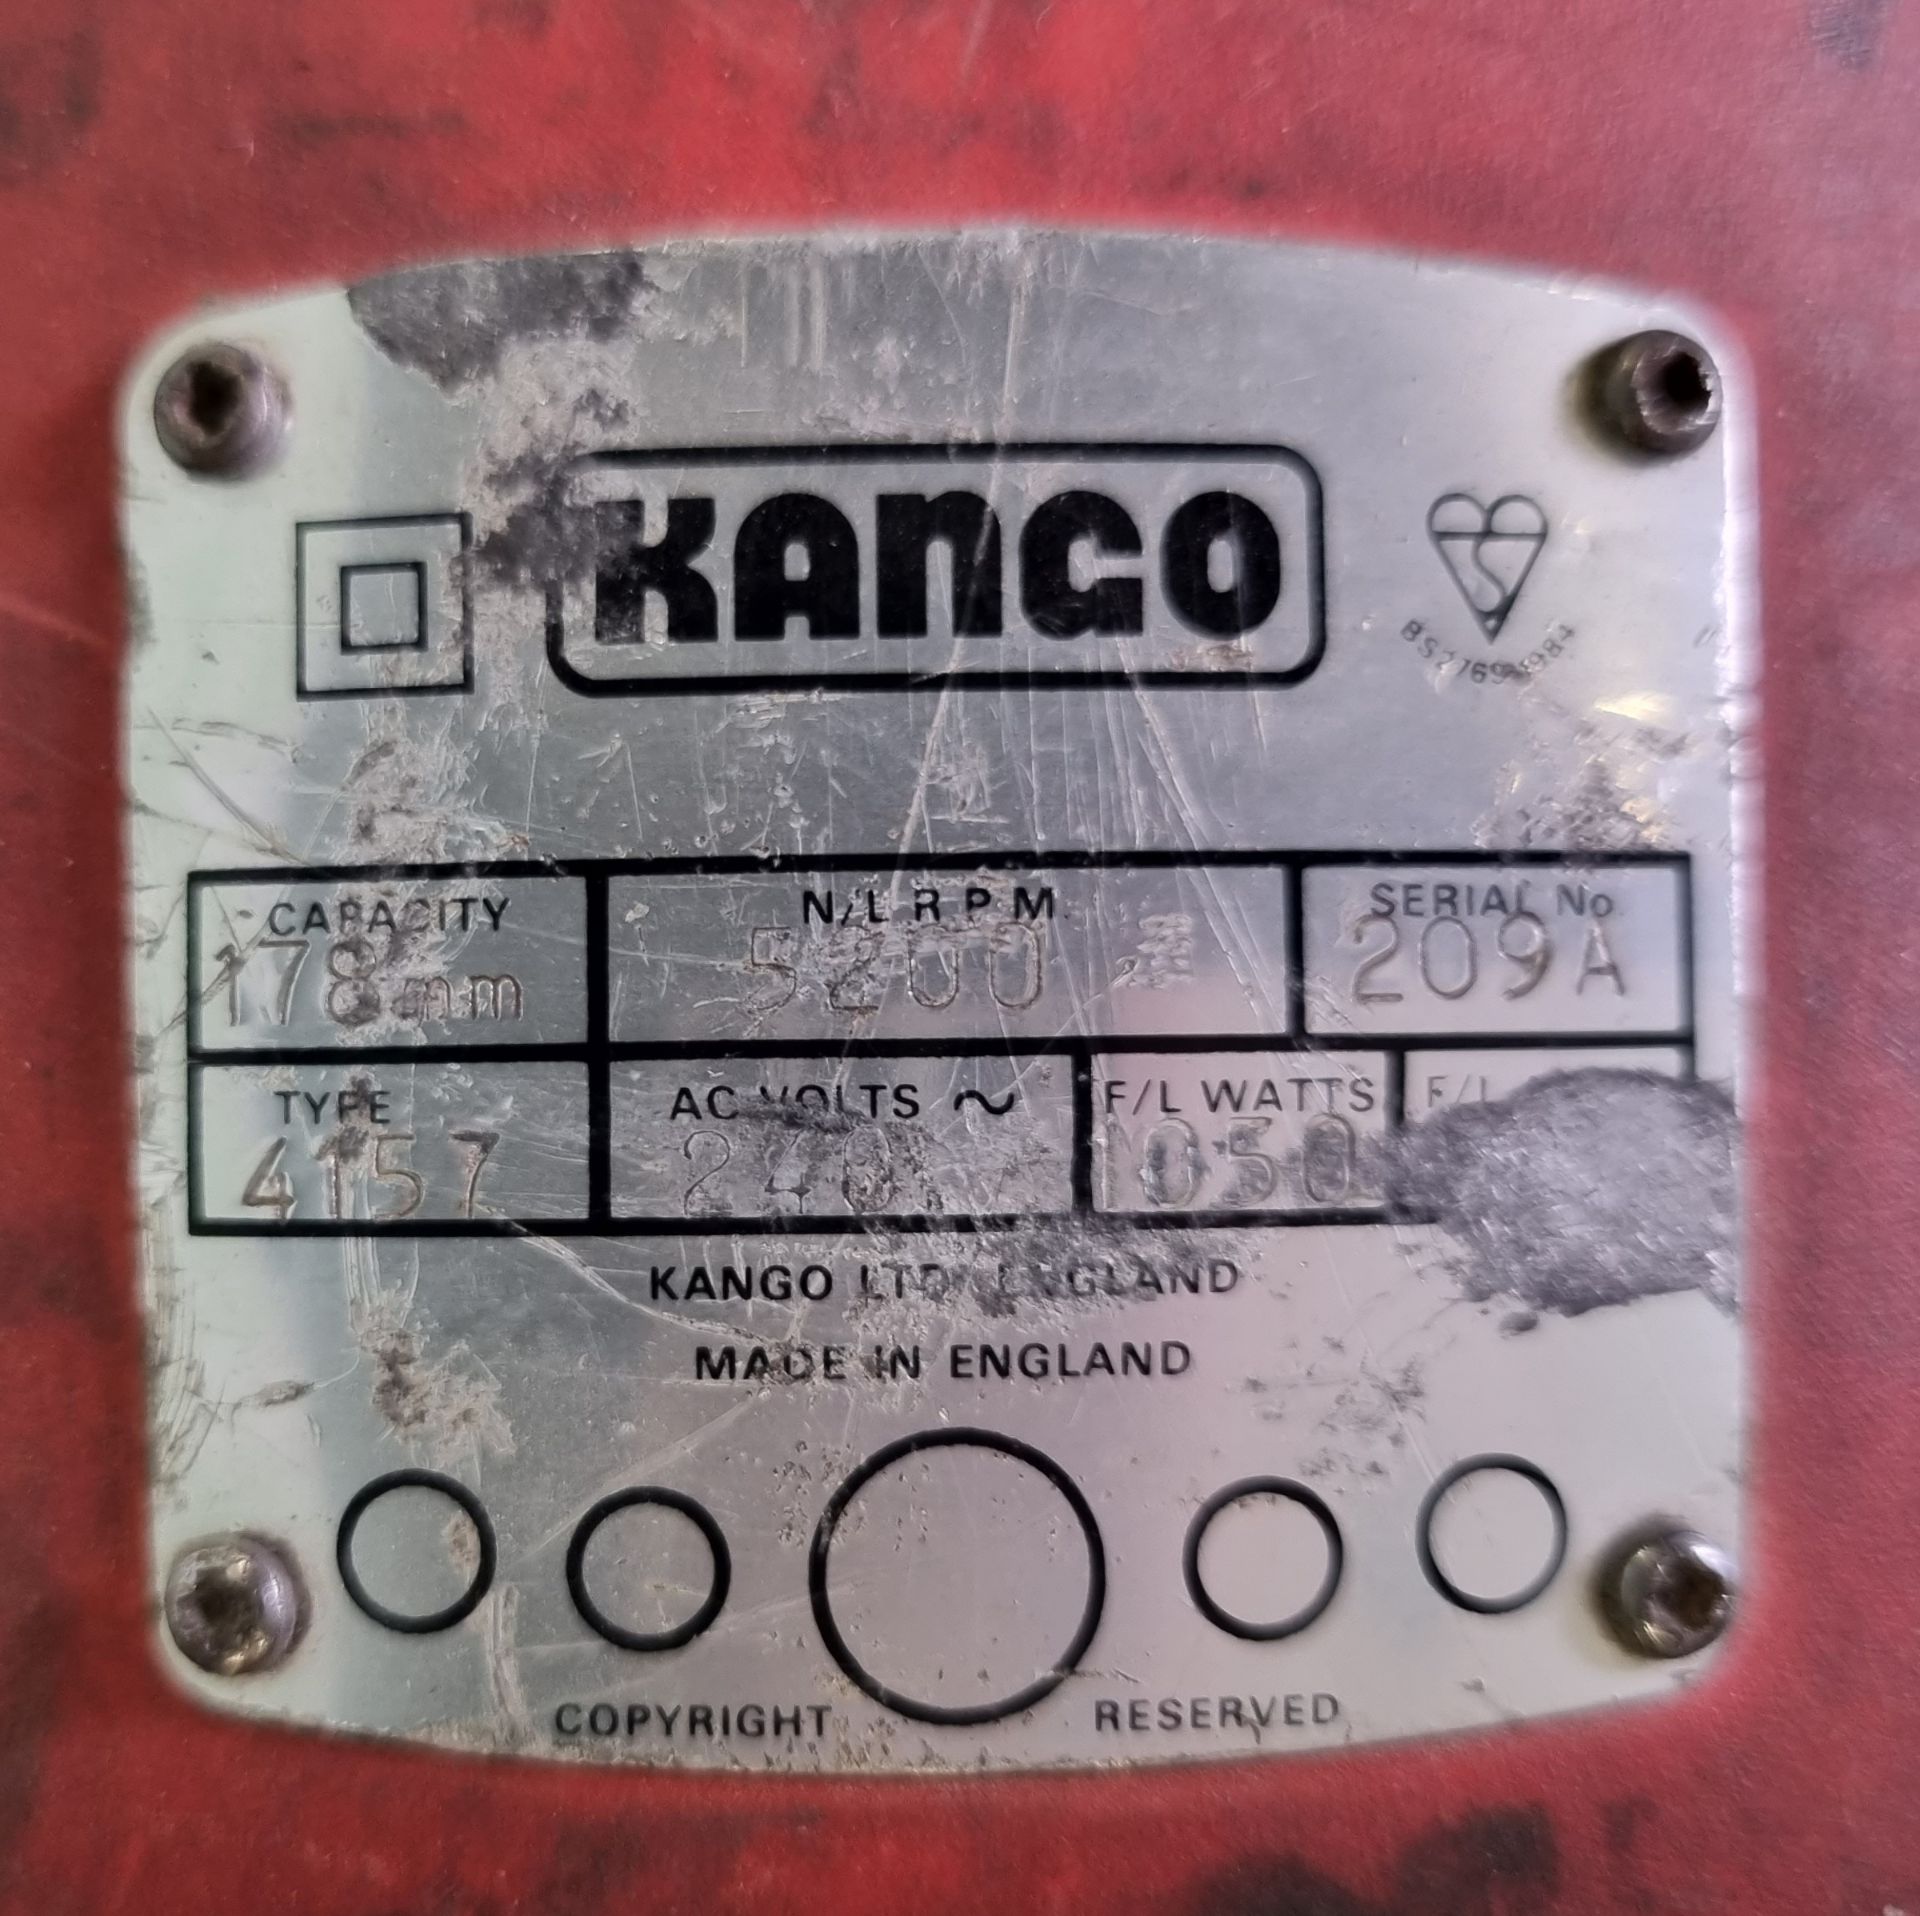 Kango 4157 18 cm dia electric angle grinder 240V - Image 3 of 5